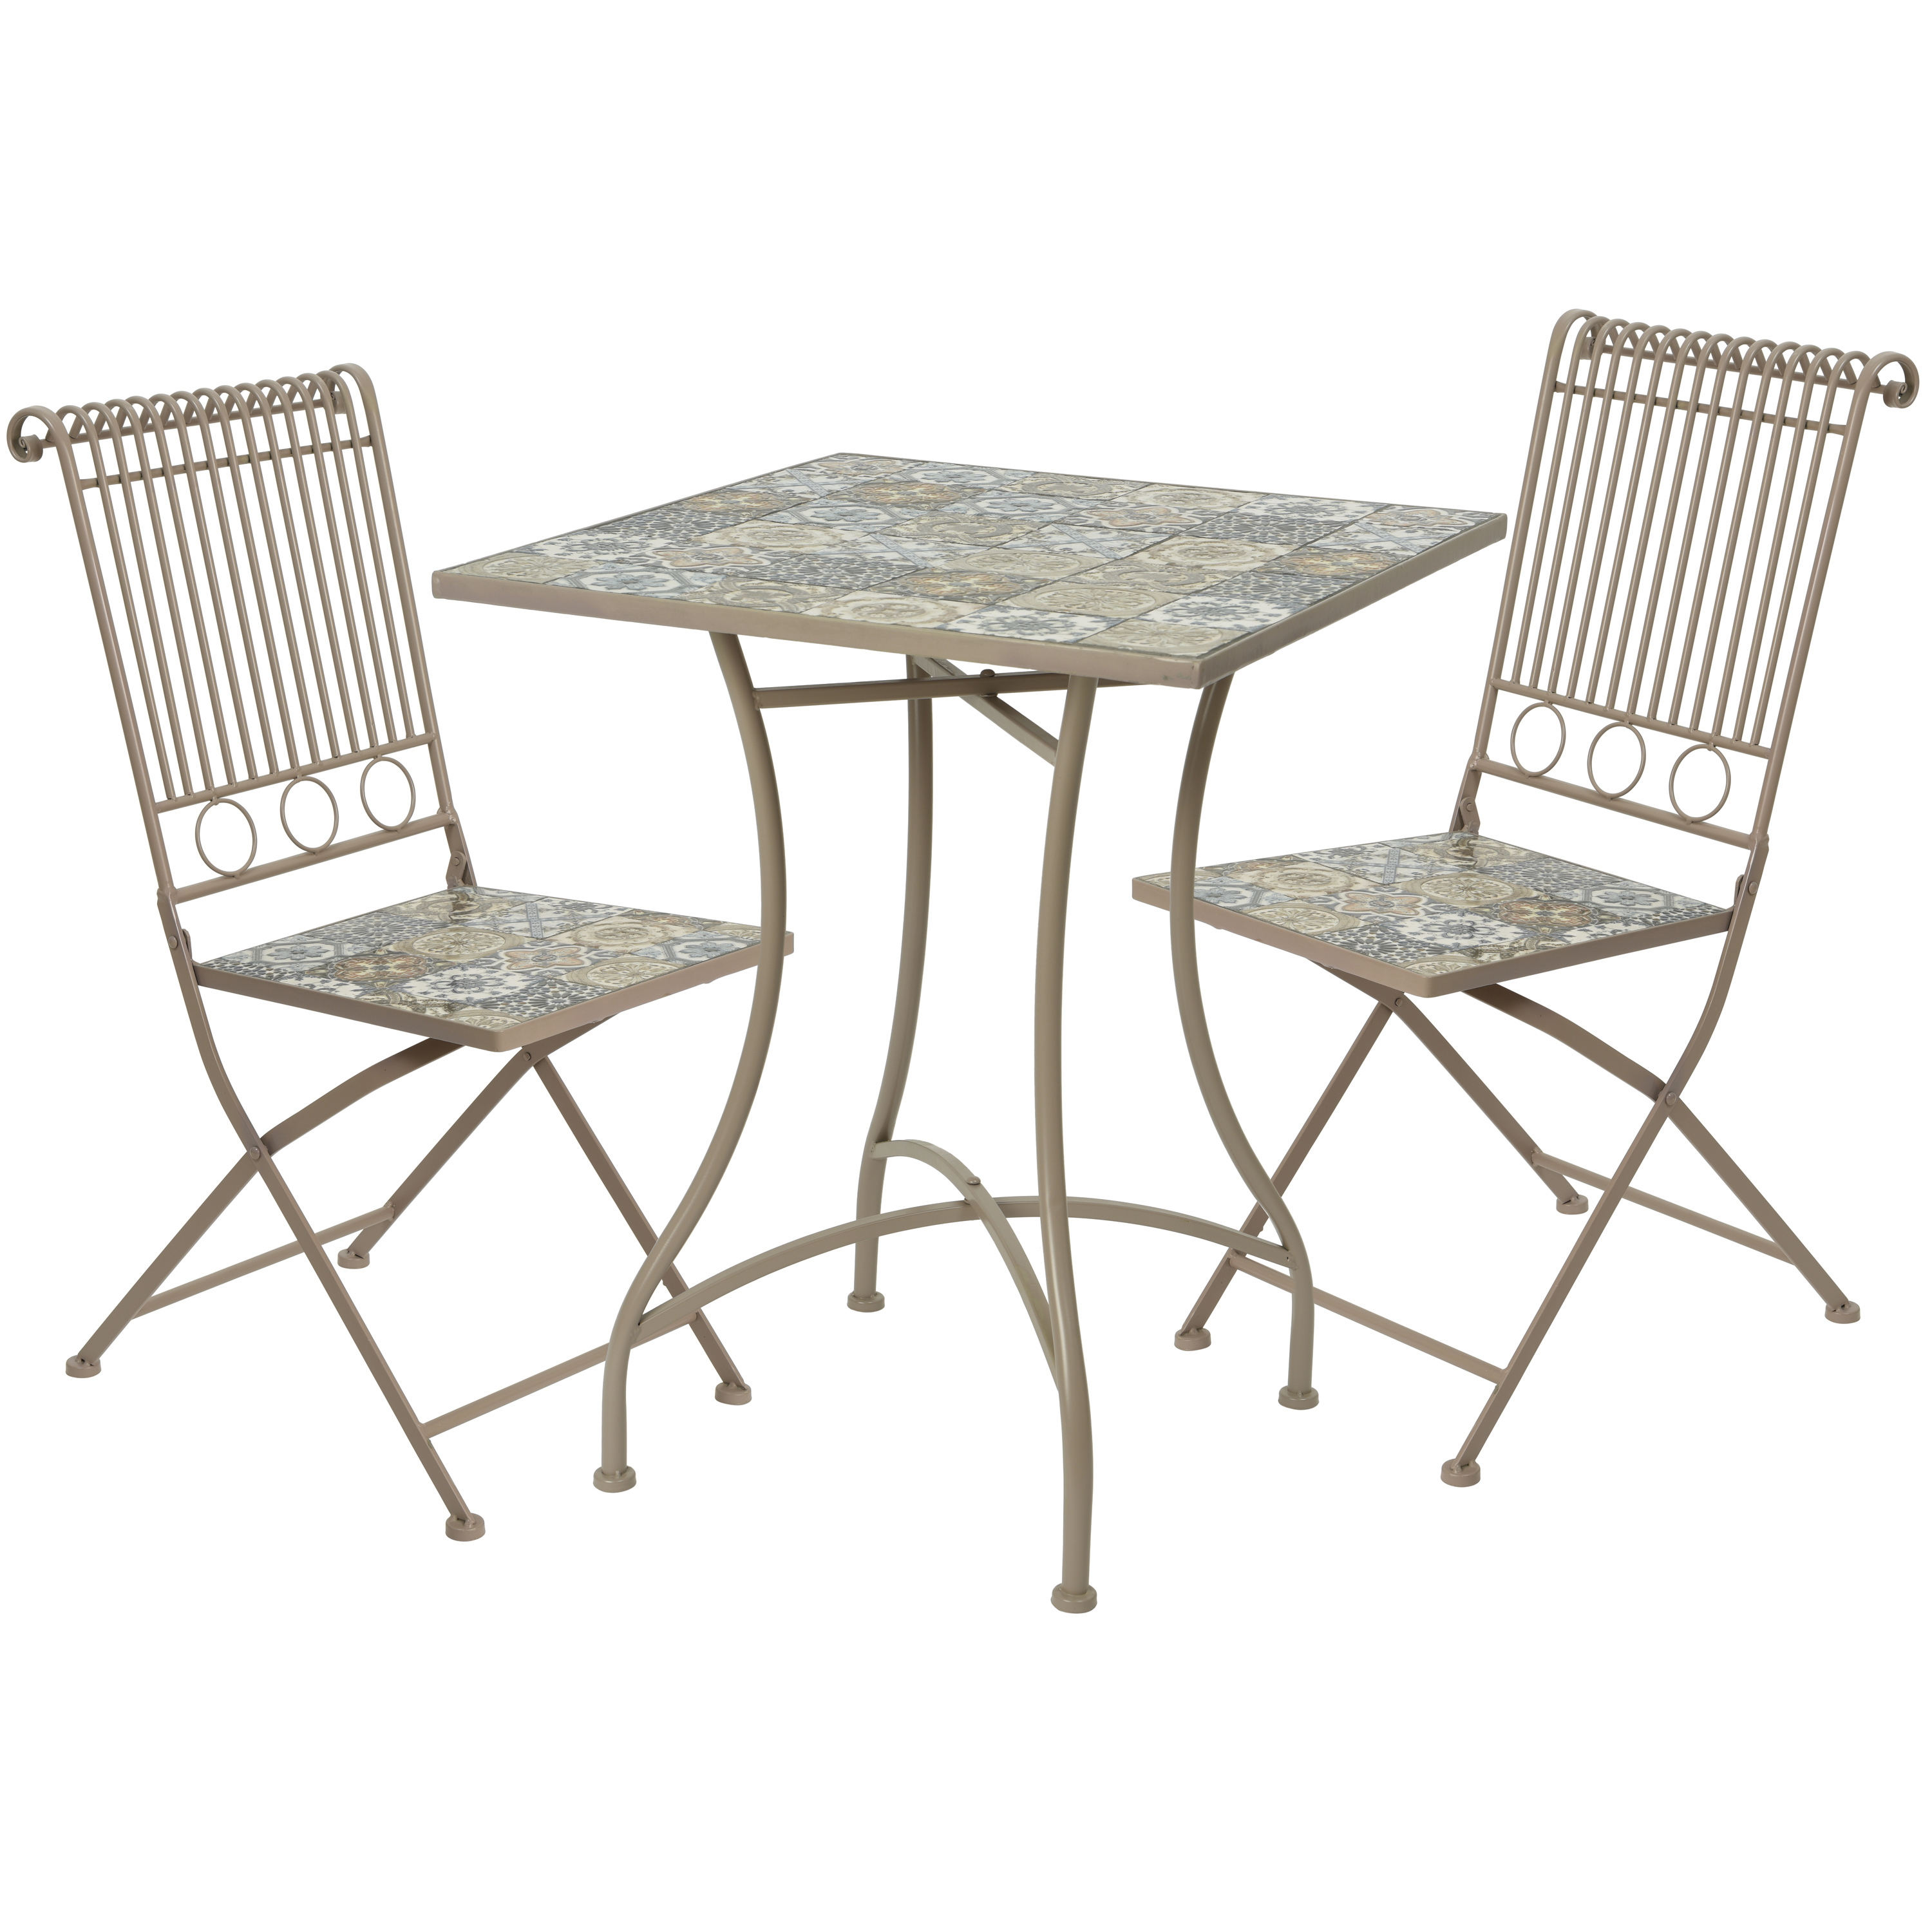 фото Садовая мебель с мозаикой тулуза (стол и 2 стула), металл, керамика, kaemingk